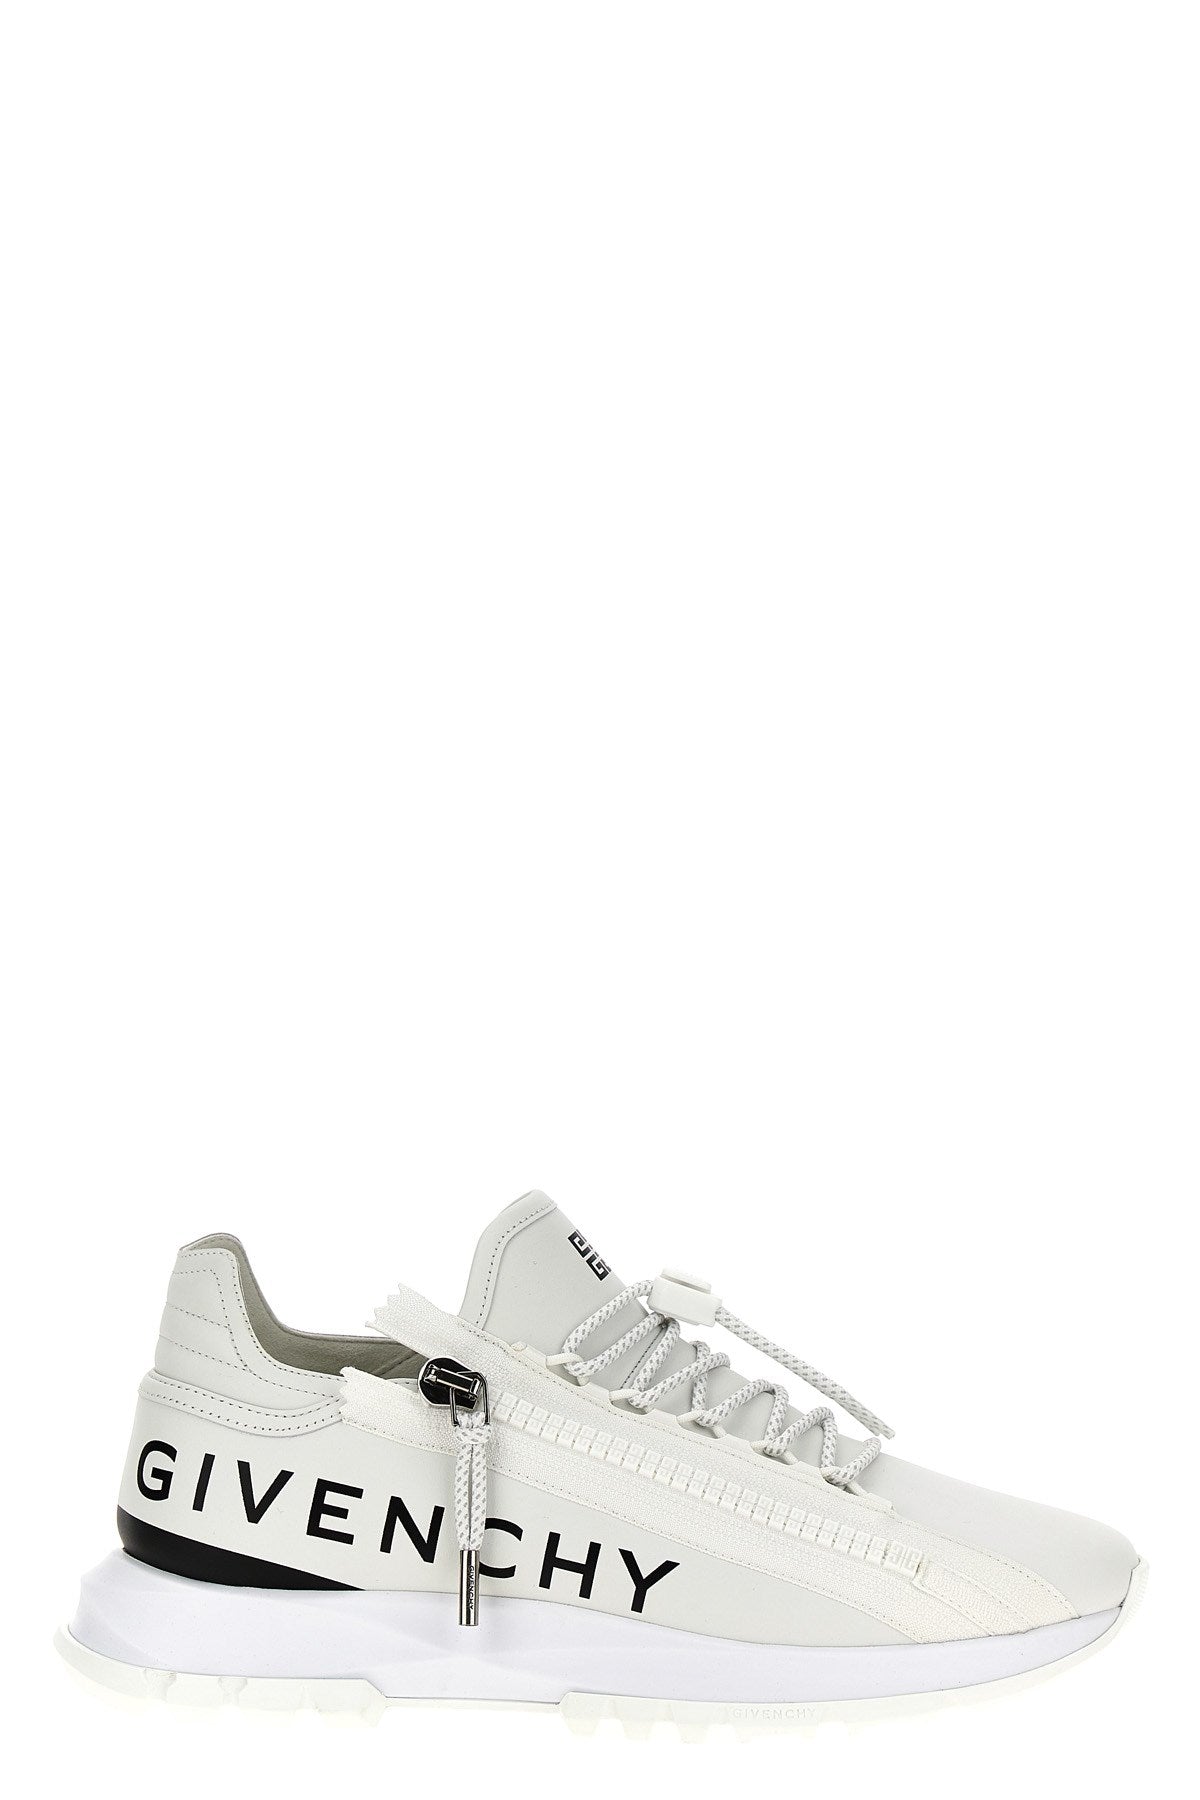 Givenchy Men 'spectre Runner' Sneakers In White